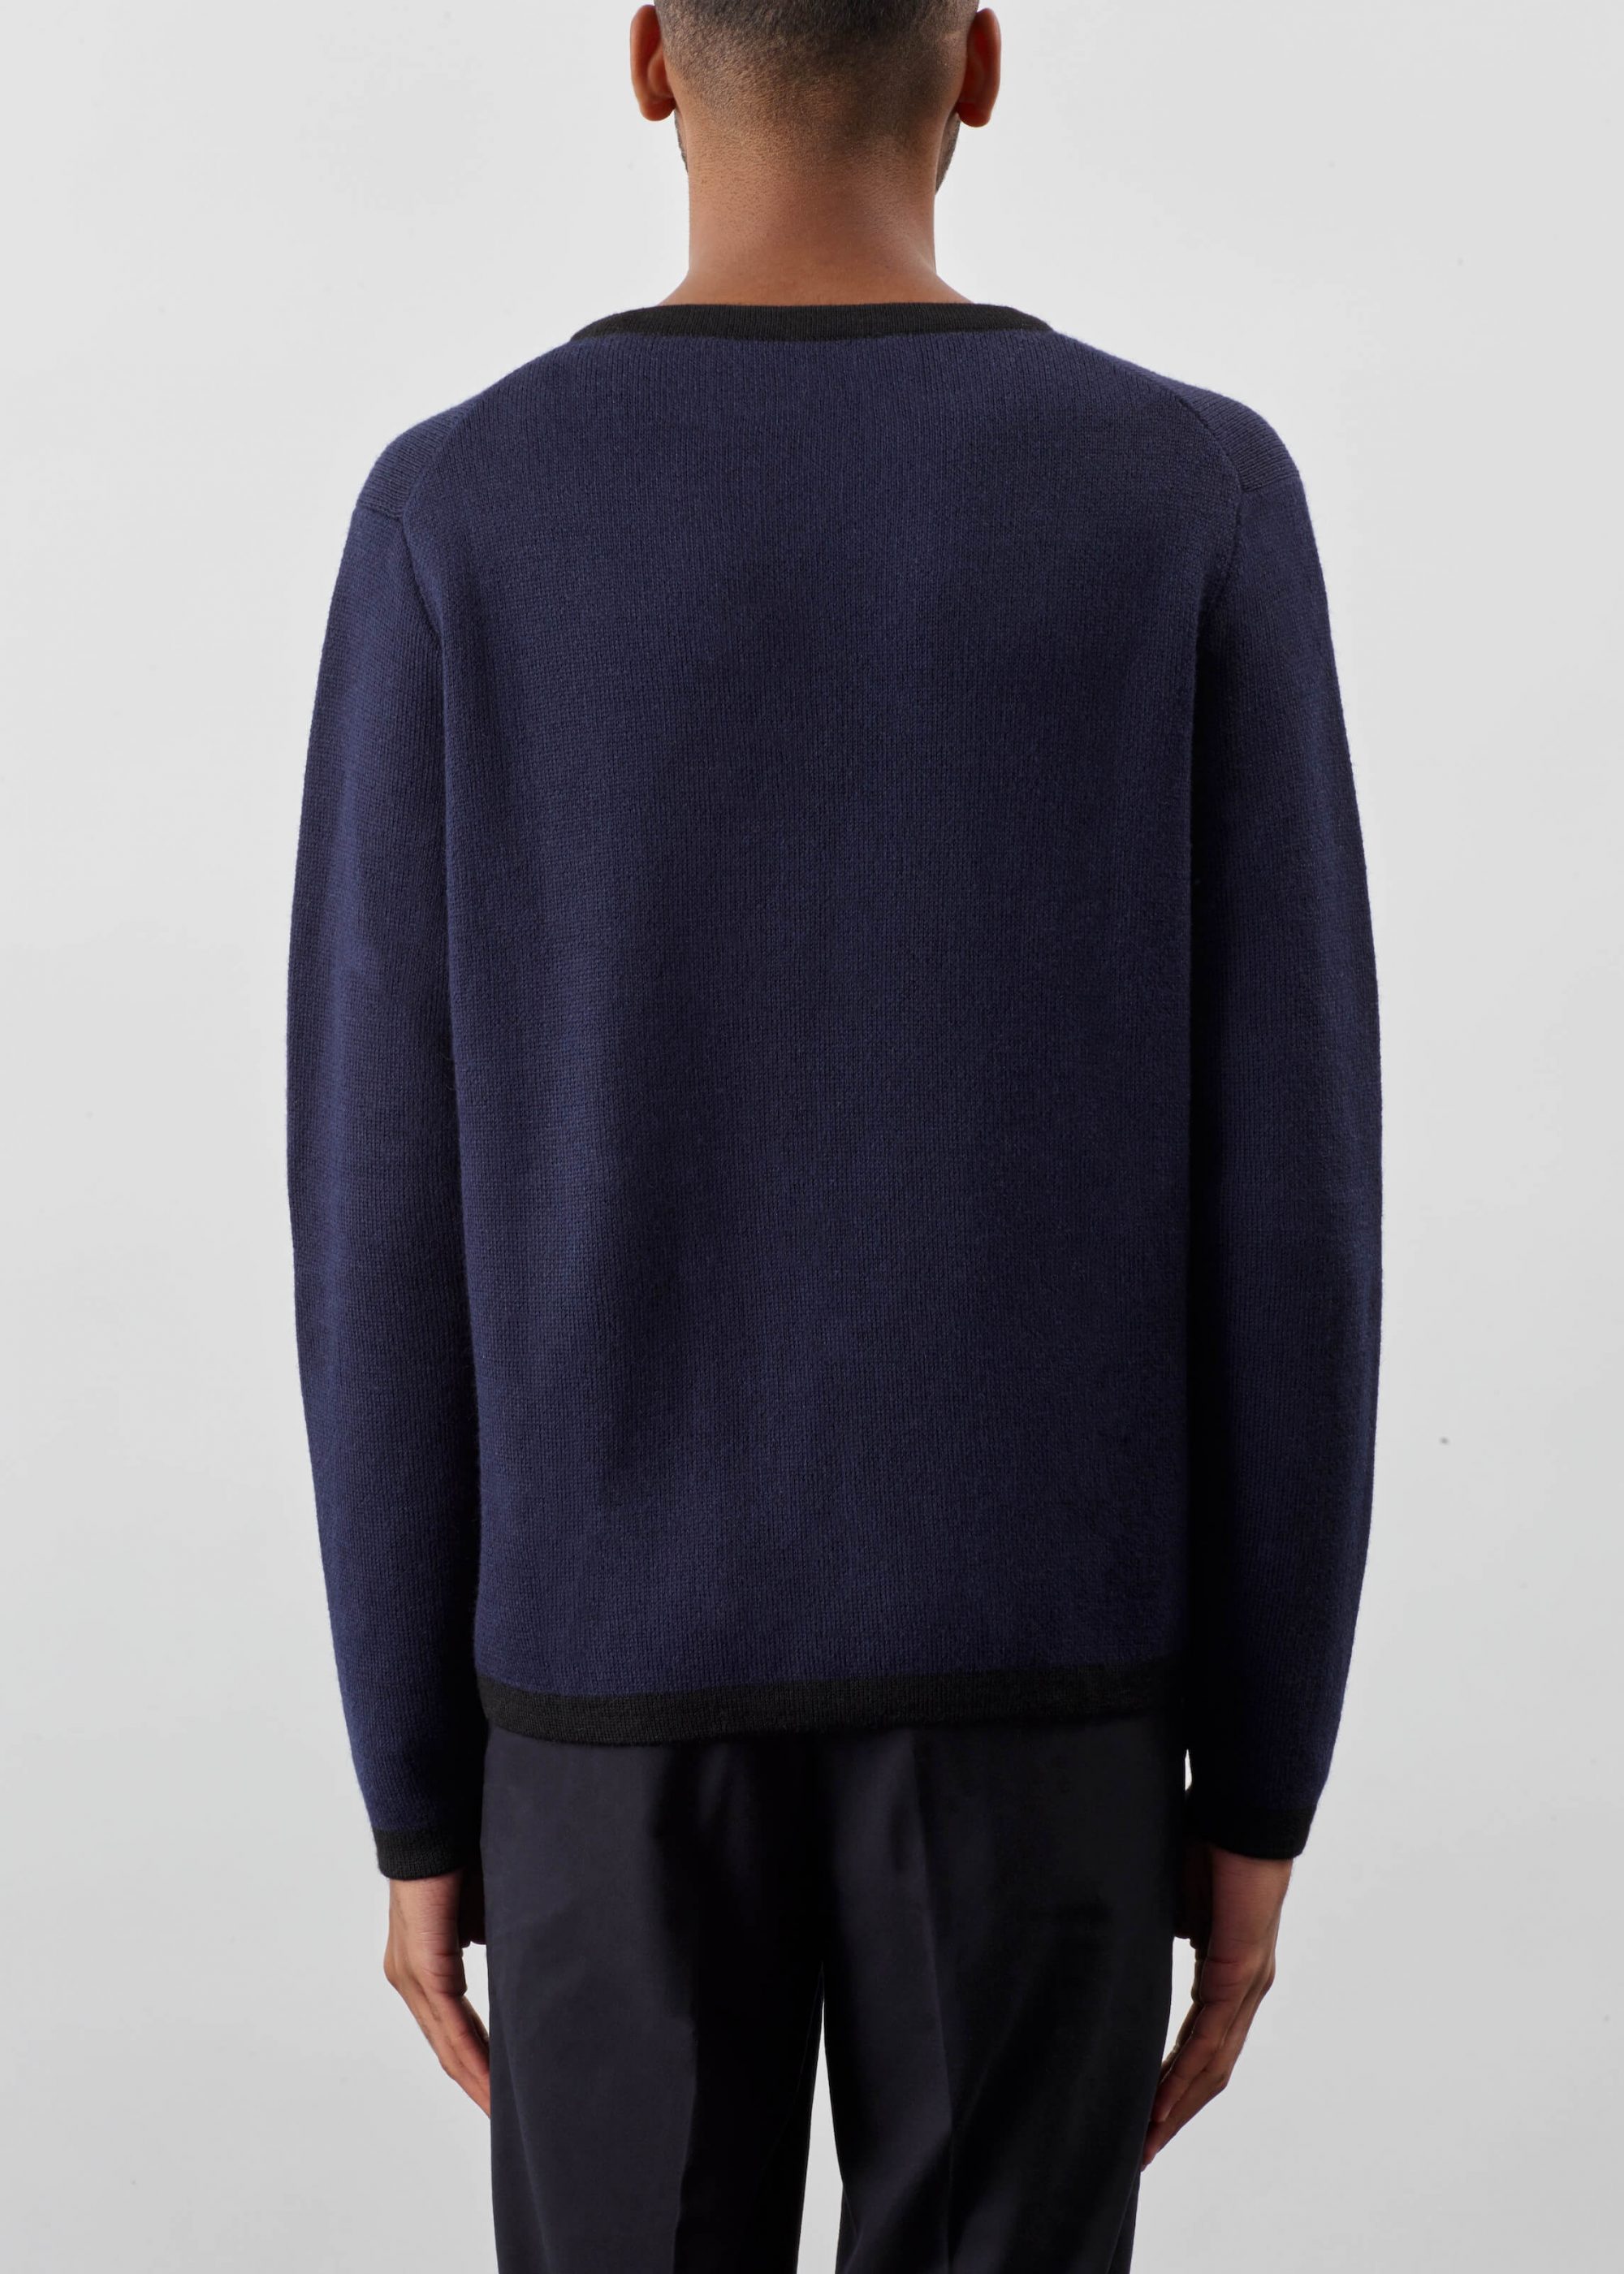 Product image for »Bauhaus« Sweater Baby Alpaca | Navy Black